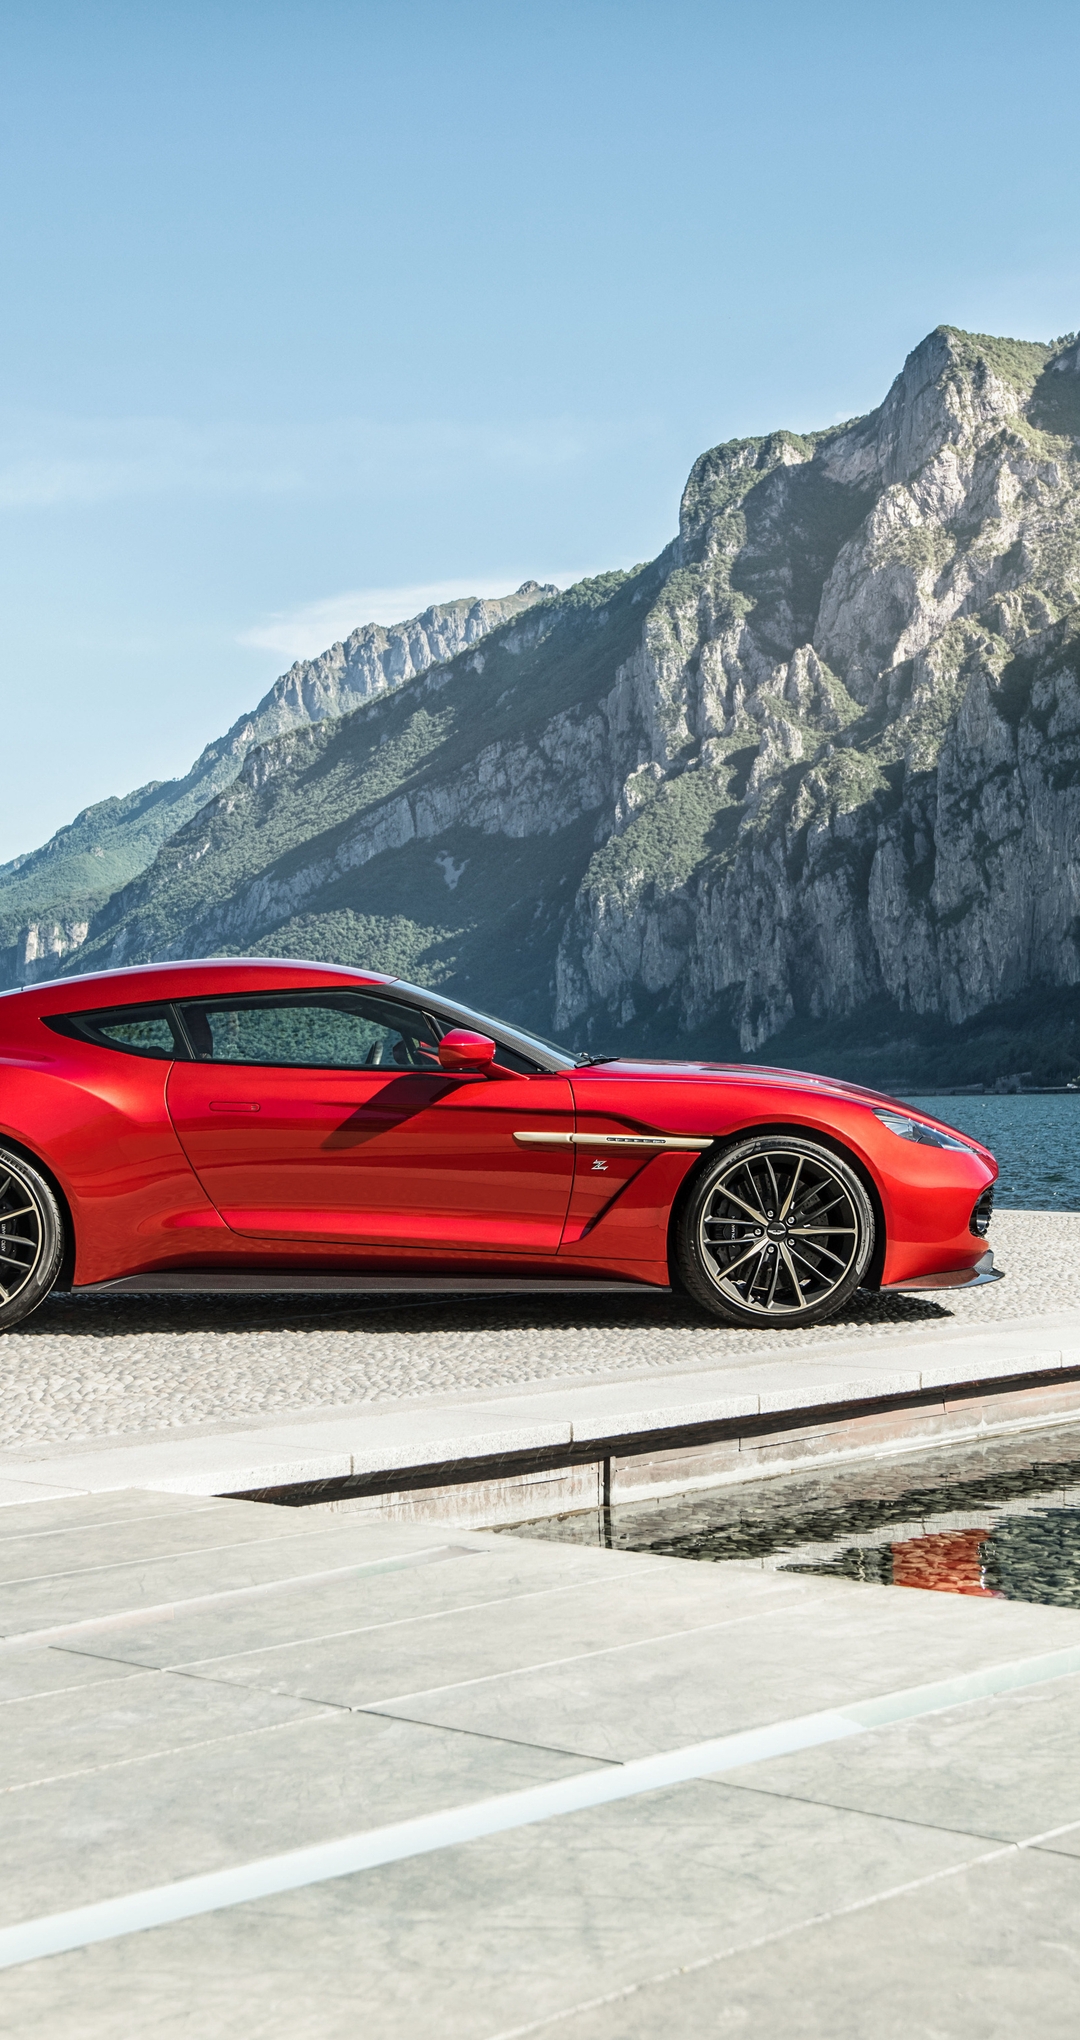 Image: Aston Martin, Red, supercar, sky, mountains, lake, side view